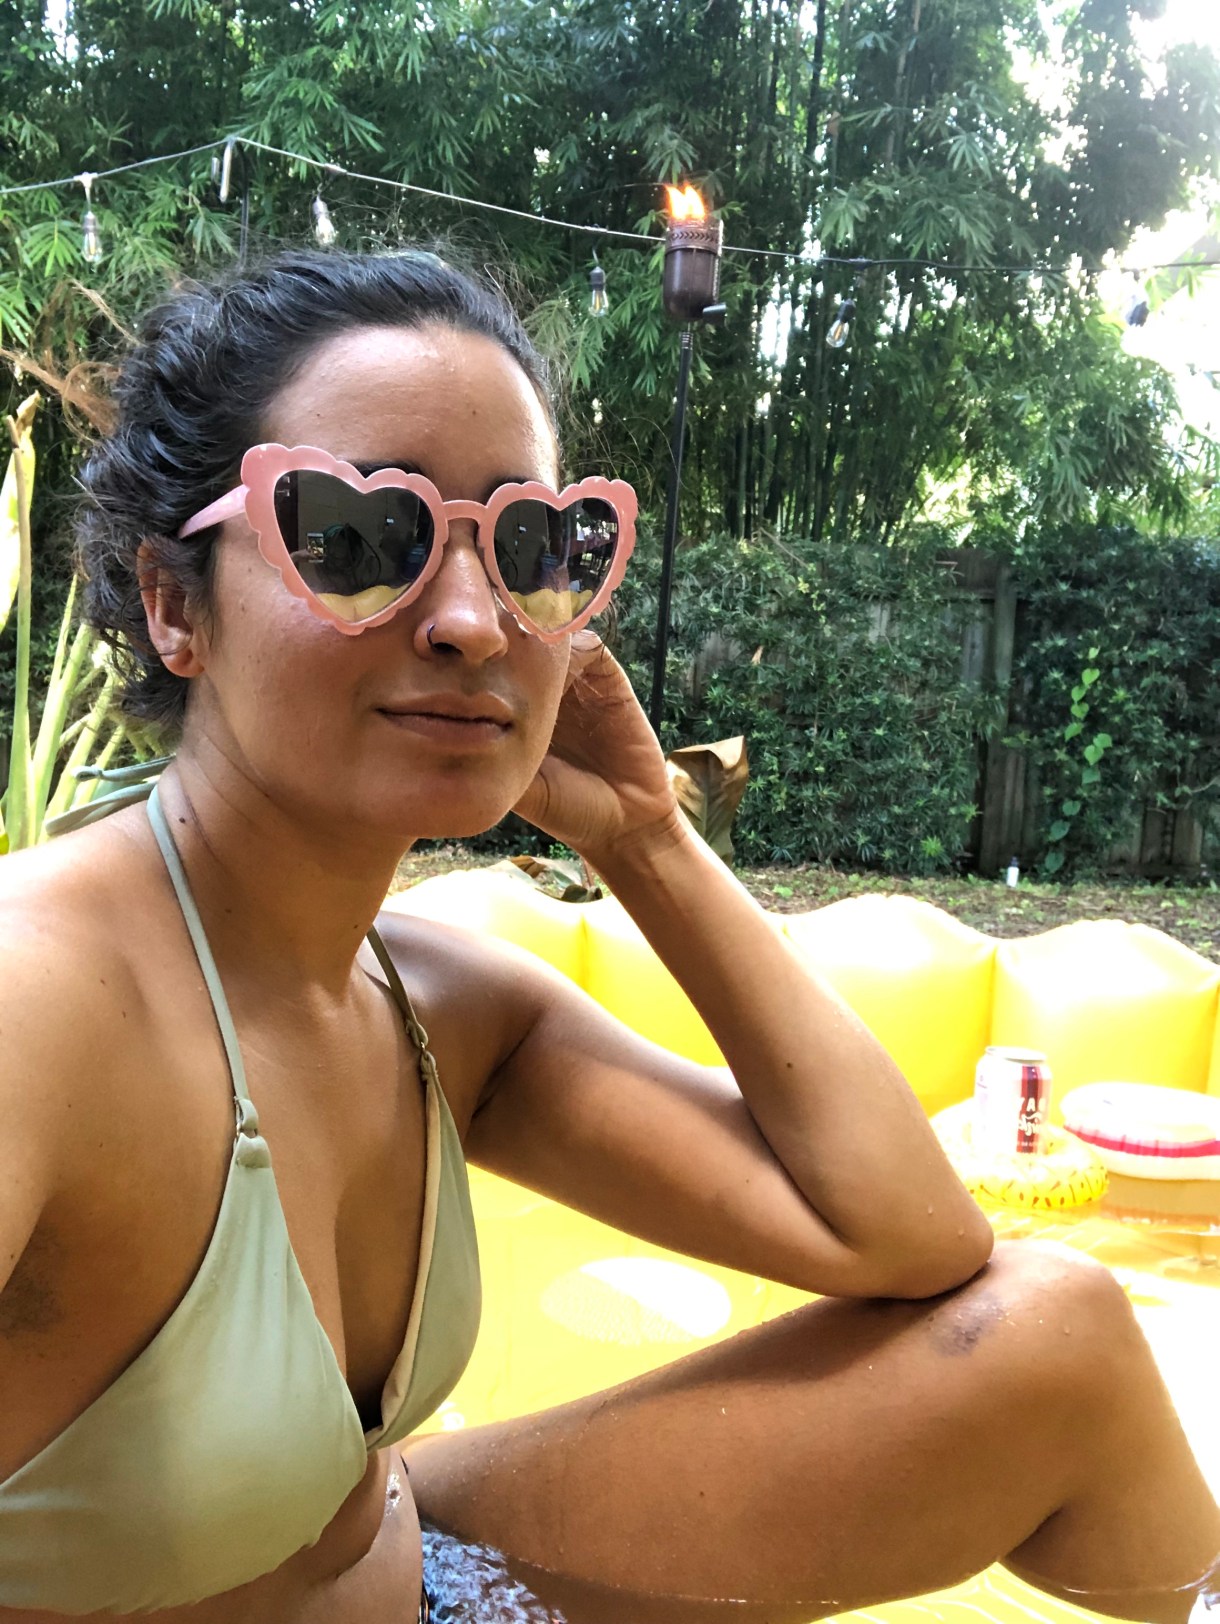 kayla, a south asian woman, wears a green bikini top and heart shaped sunglasses and sits in a kiddie pool in her backyard